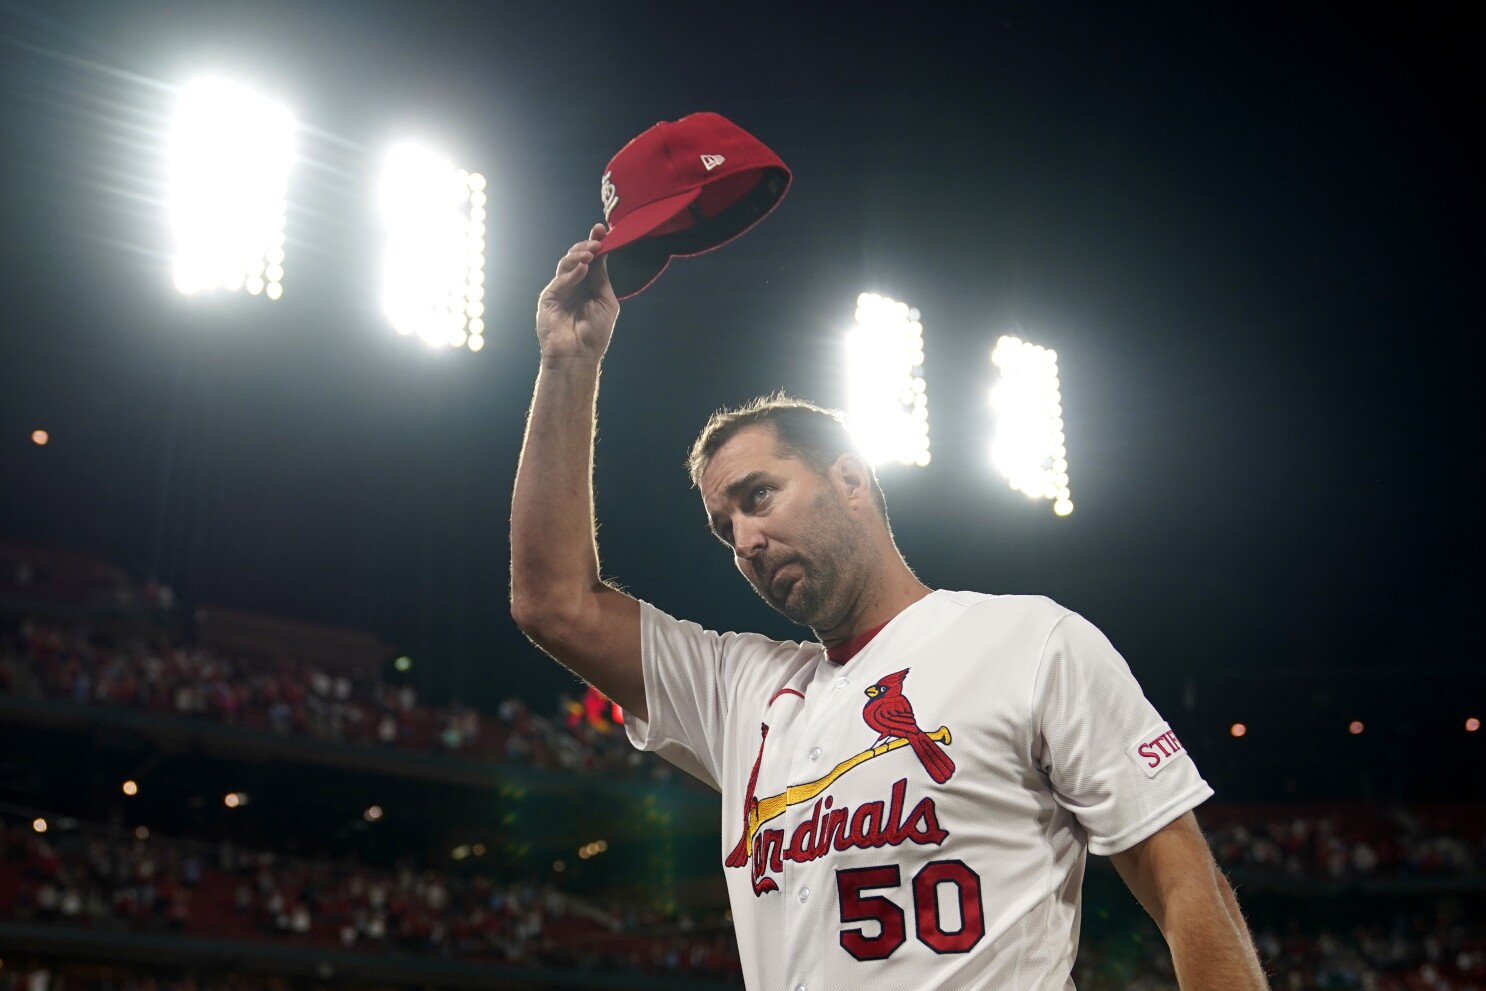 Cardinals' right hander Adam Wainwright, 42, says he has thrown